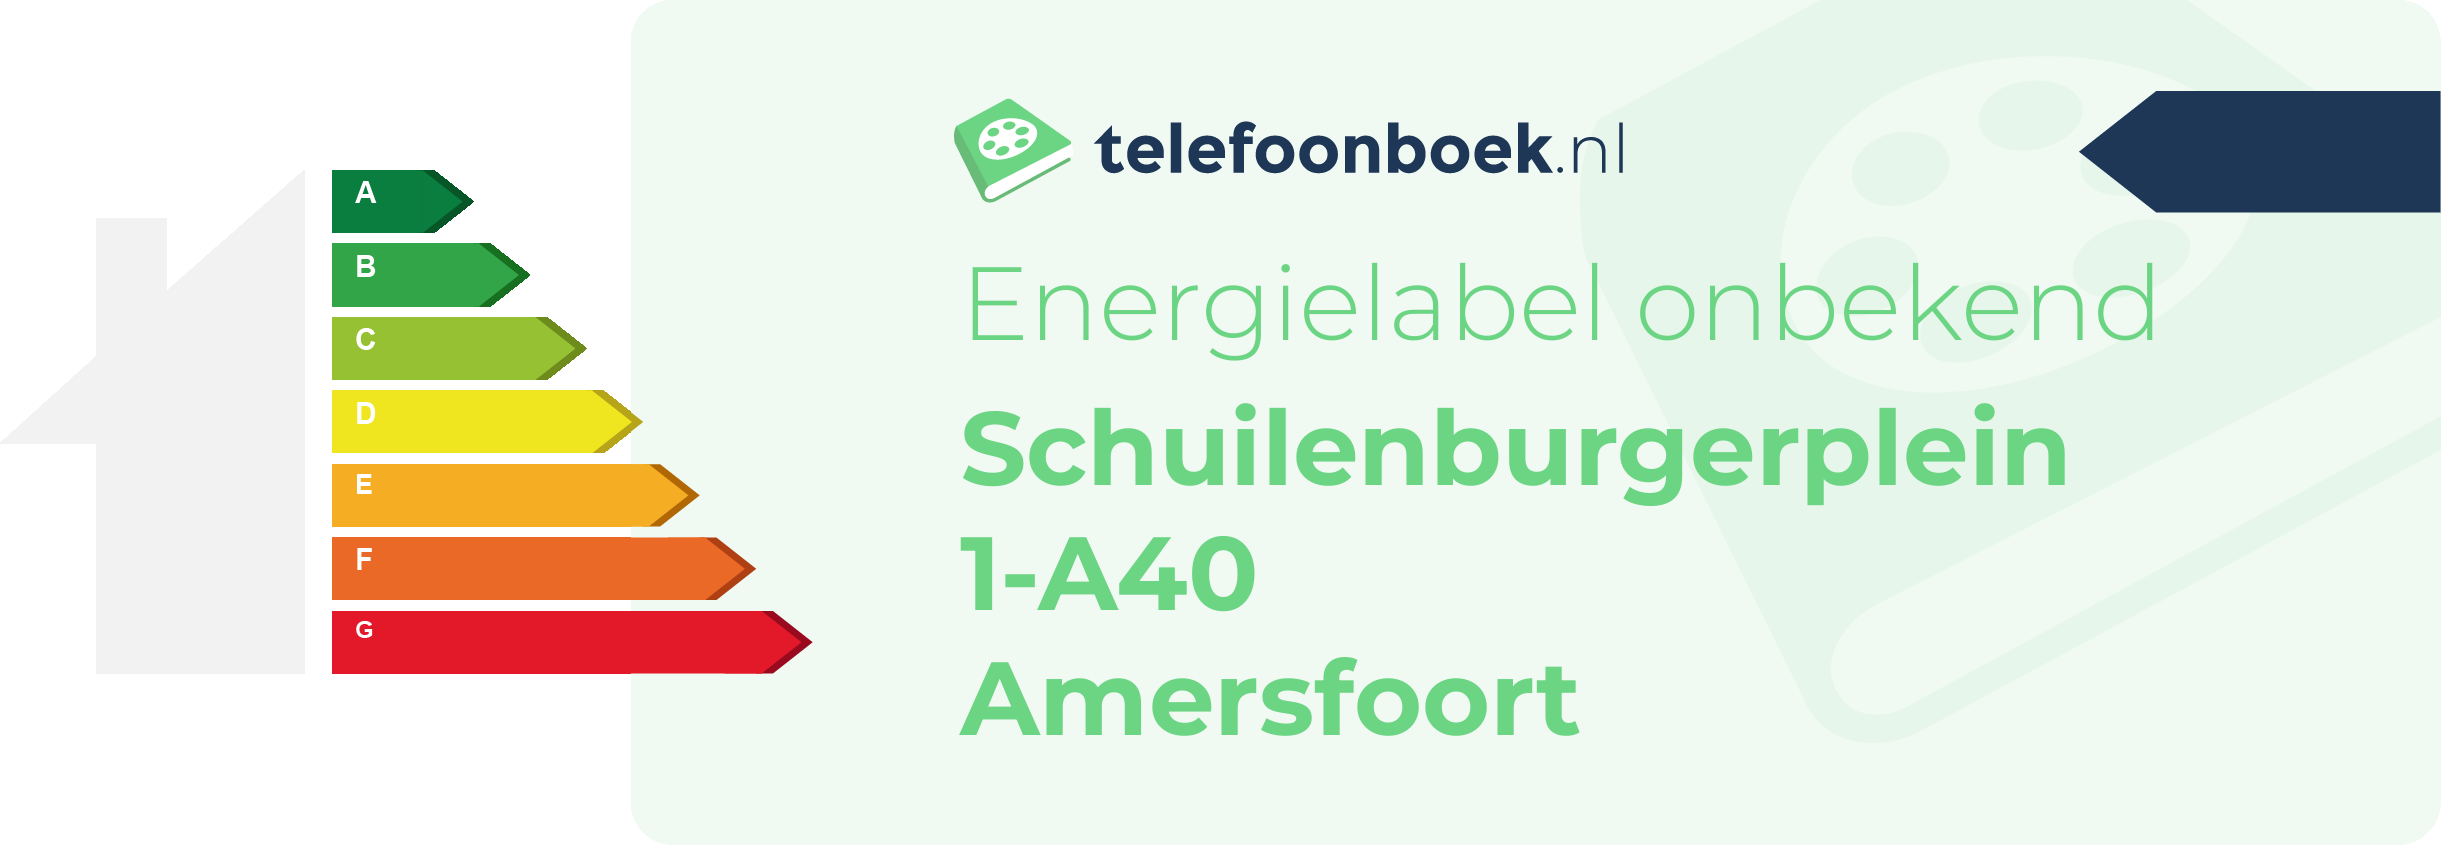 Energielabel Schuilenburgerplein 1-A40 Amersfoort